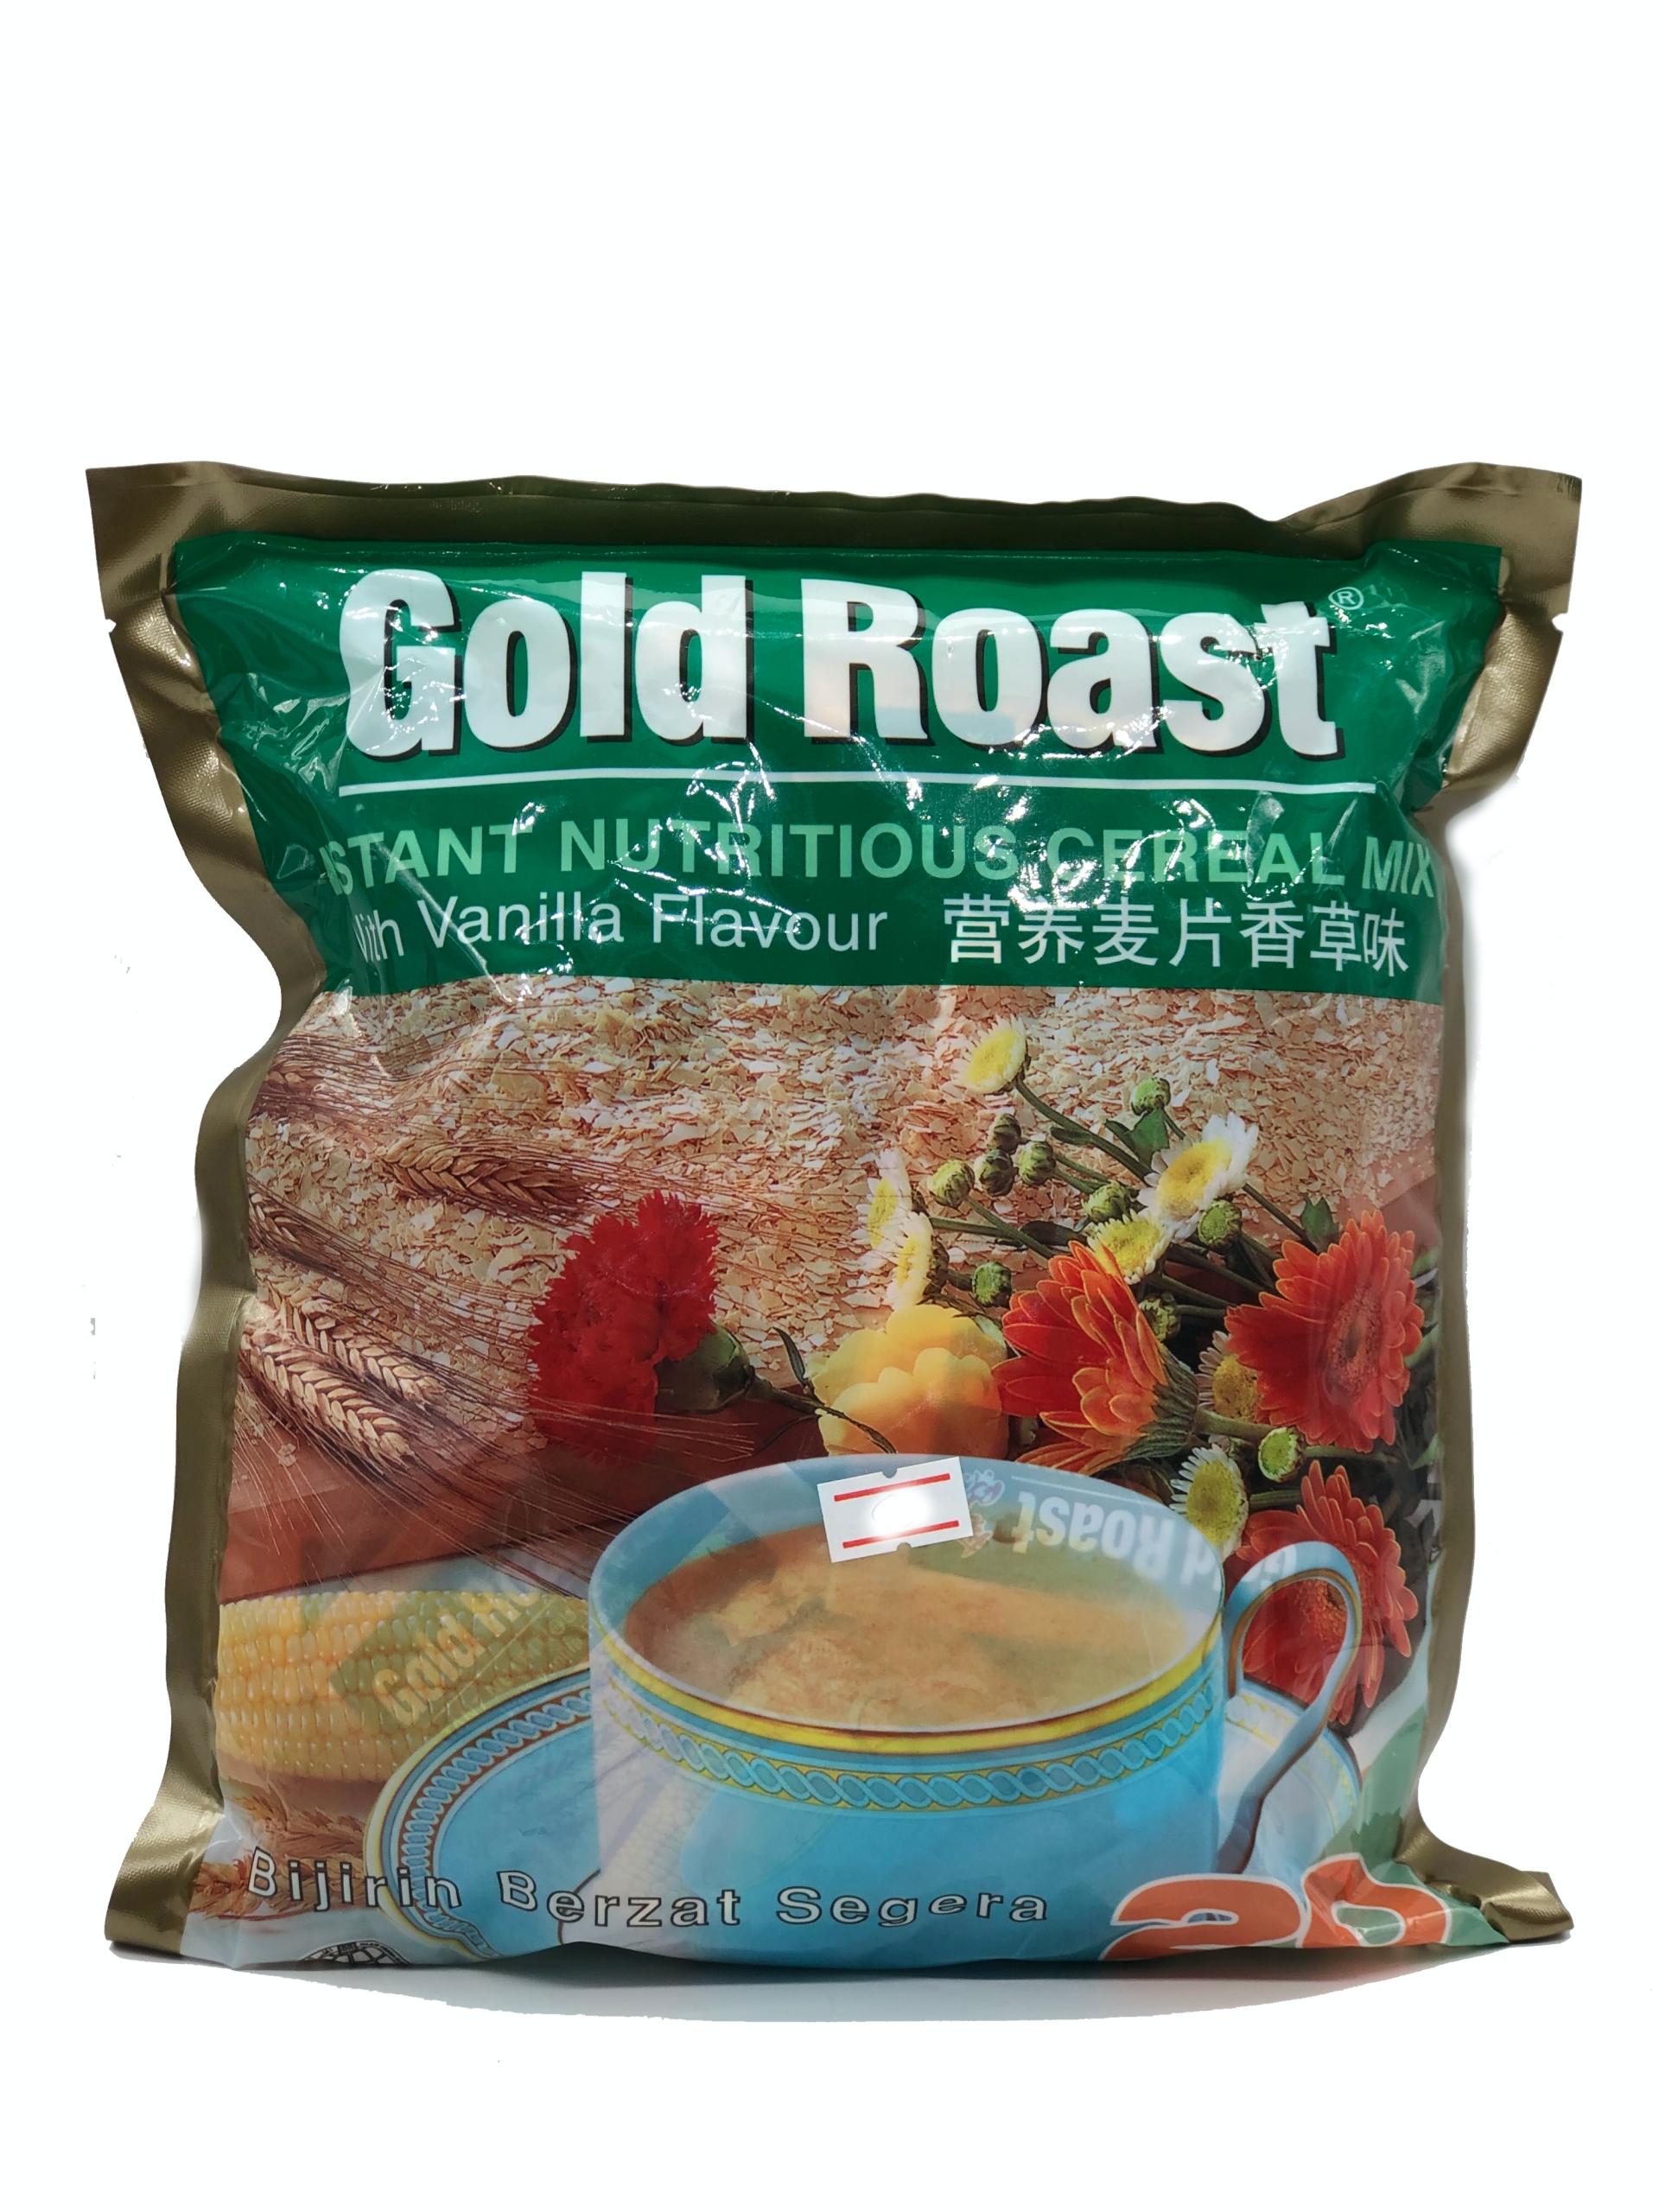 Gold Roast Instant Nutritious Cereal Mix ข้าวโอ๊ต ธัญพืช กลิ่นวนิลา